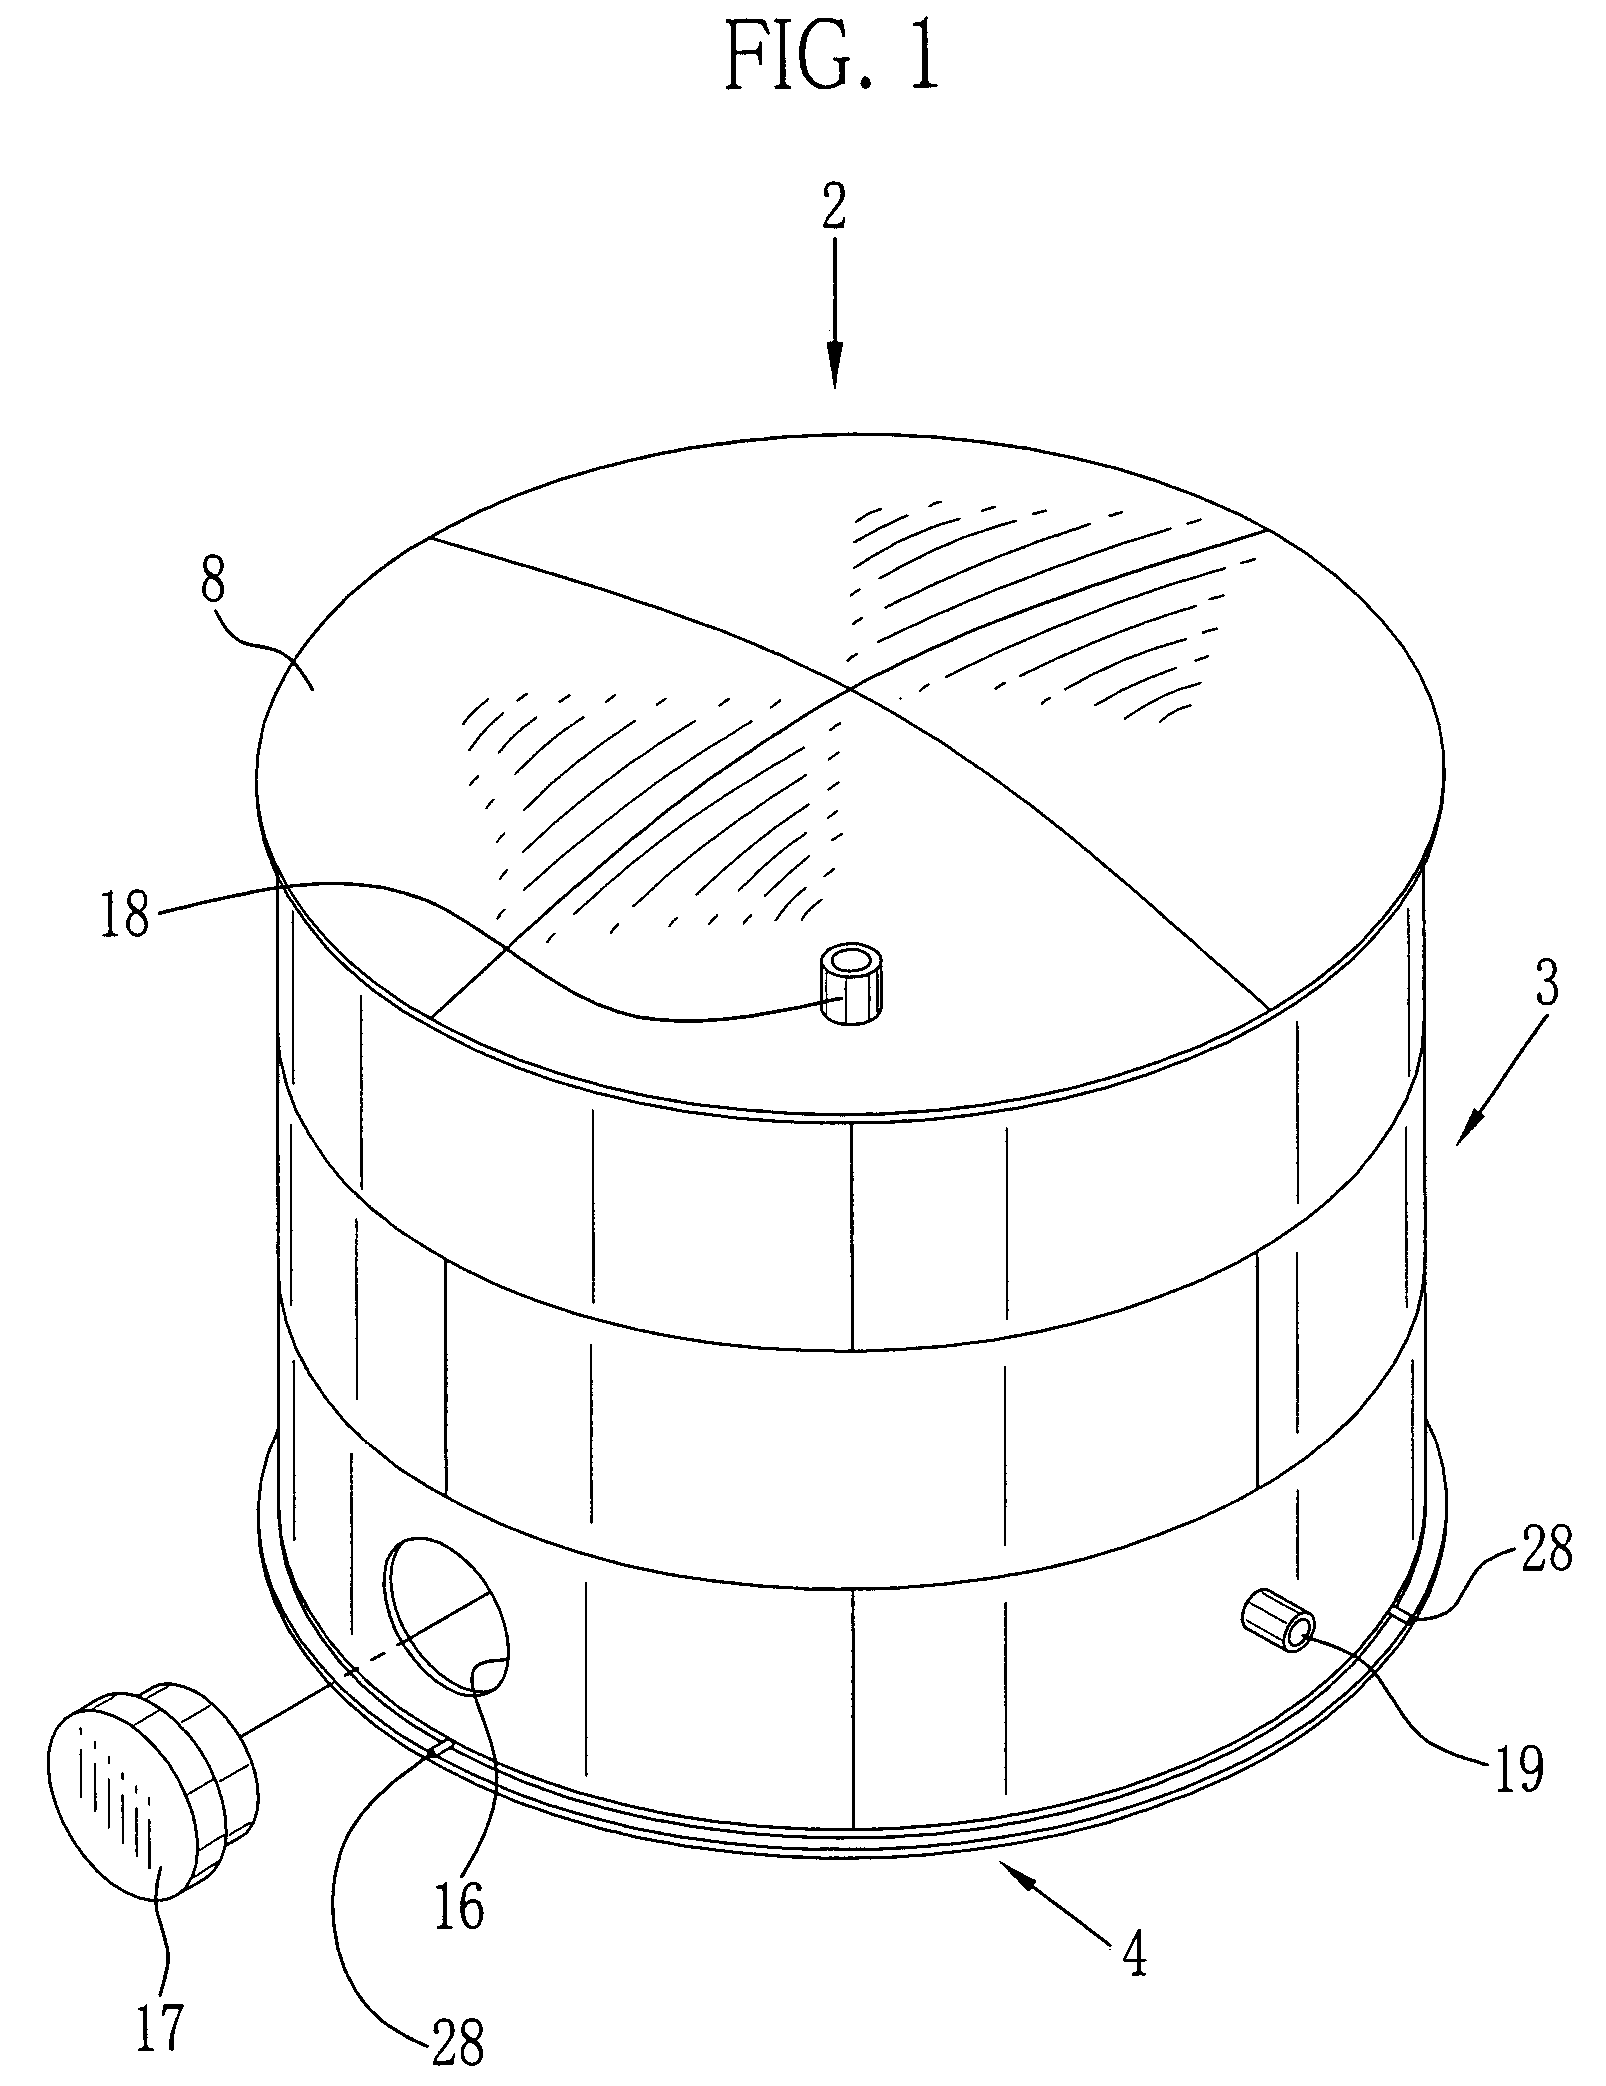 Reservoir tank for storing a liquid